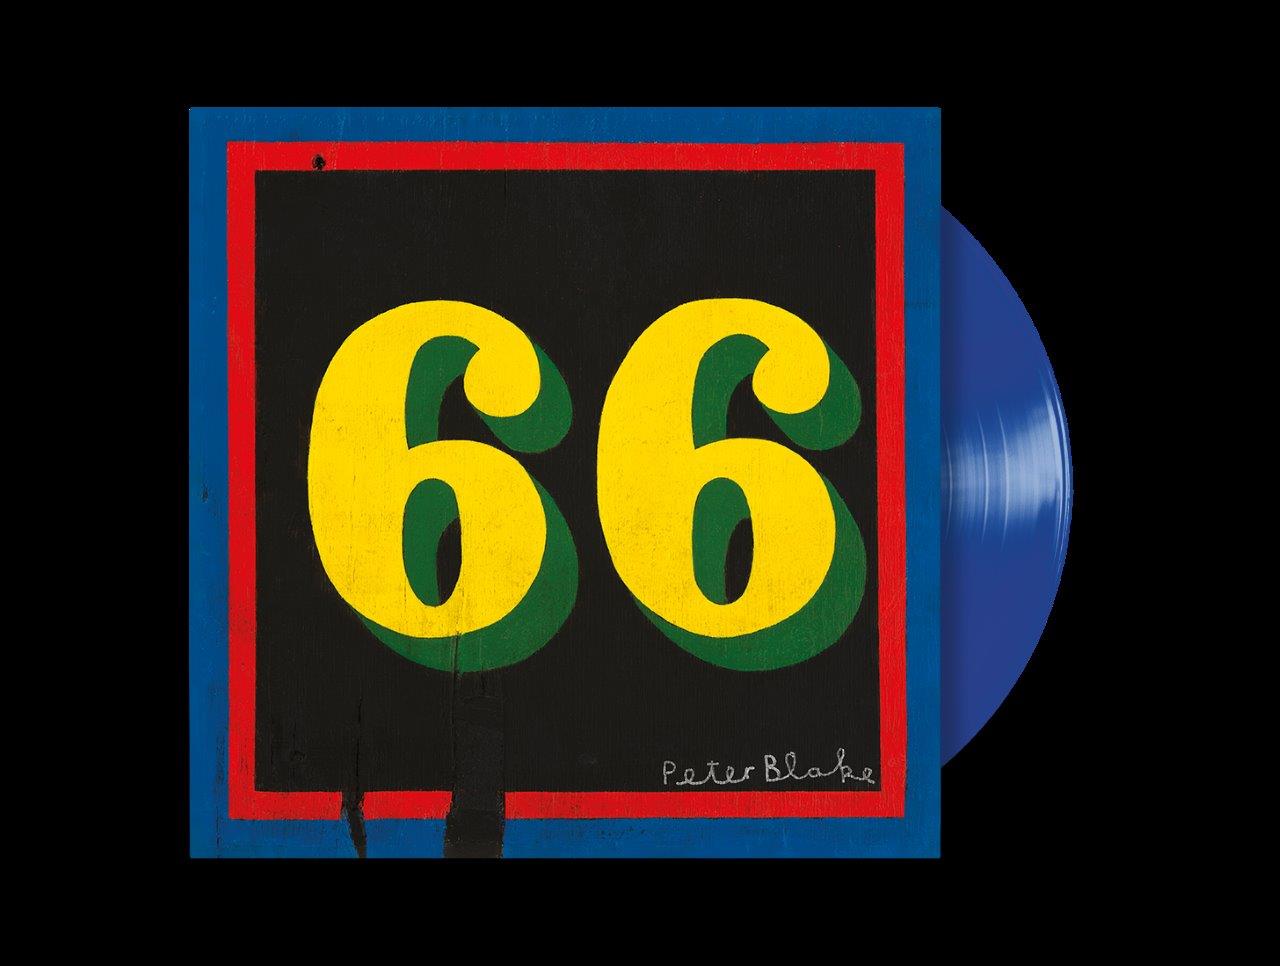 Paul Weller - 66 (Blue Vinyl)